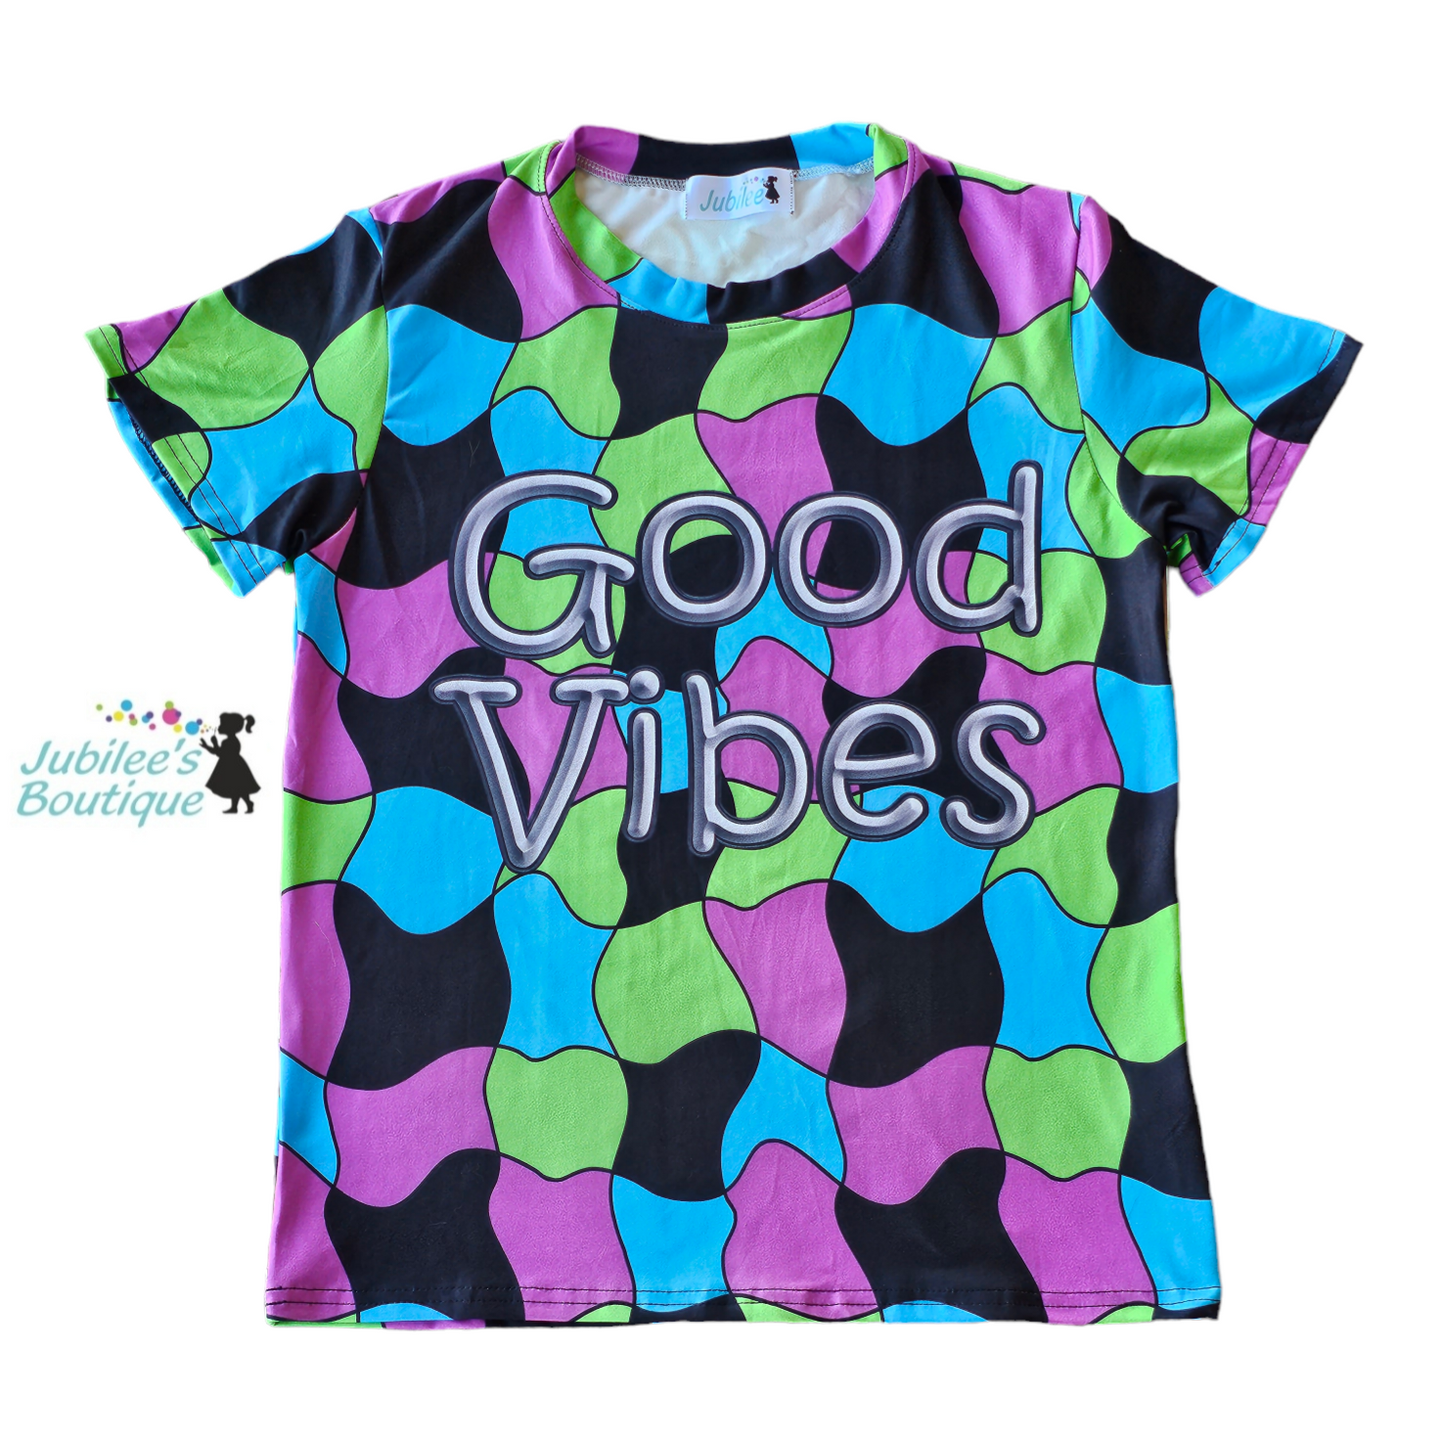 Good Vibes Shirt